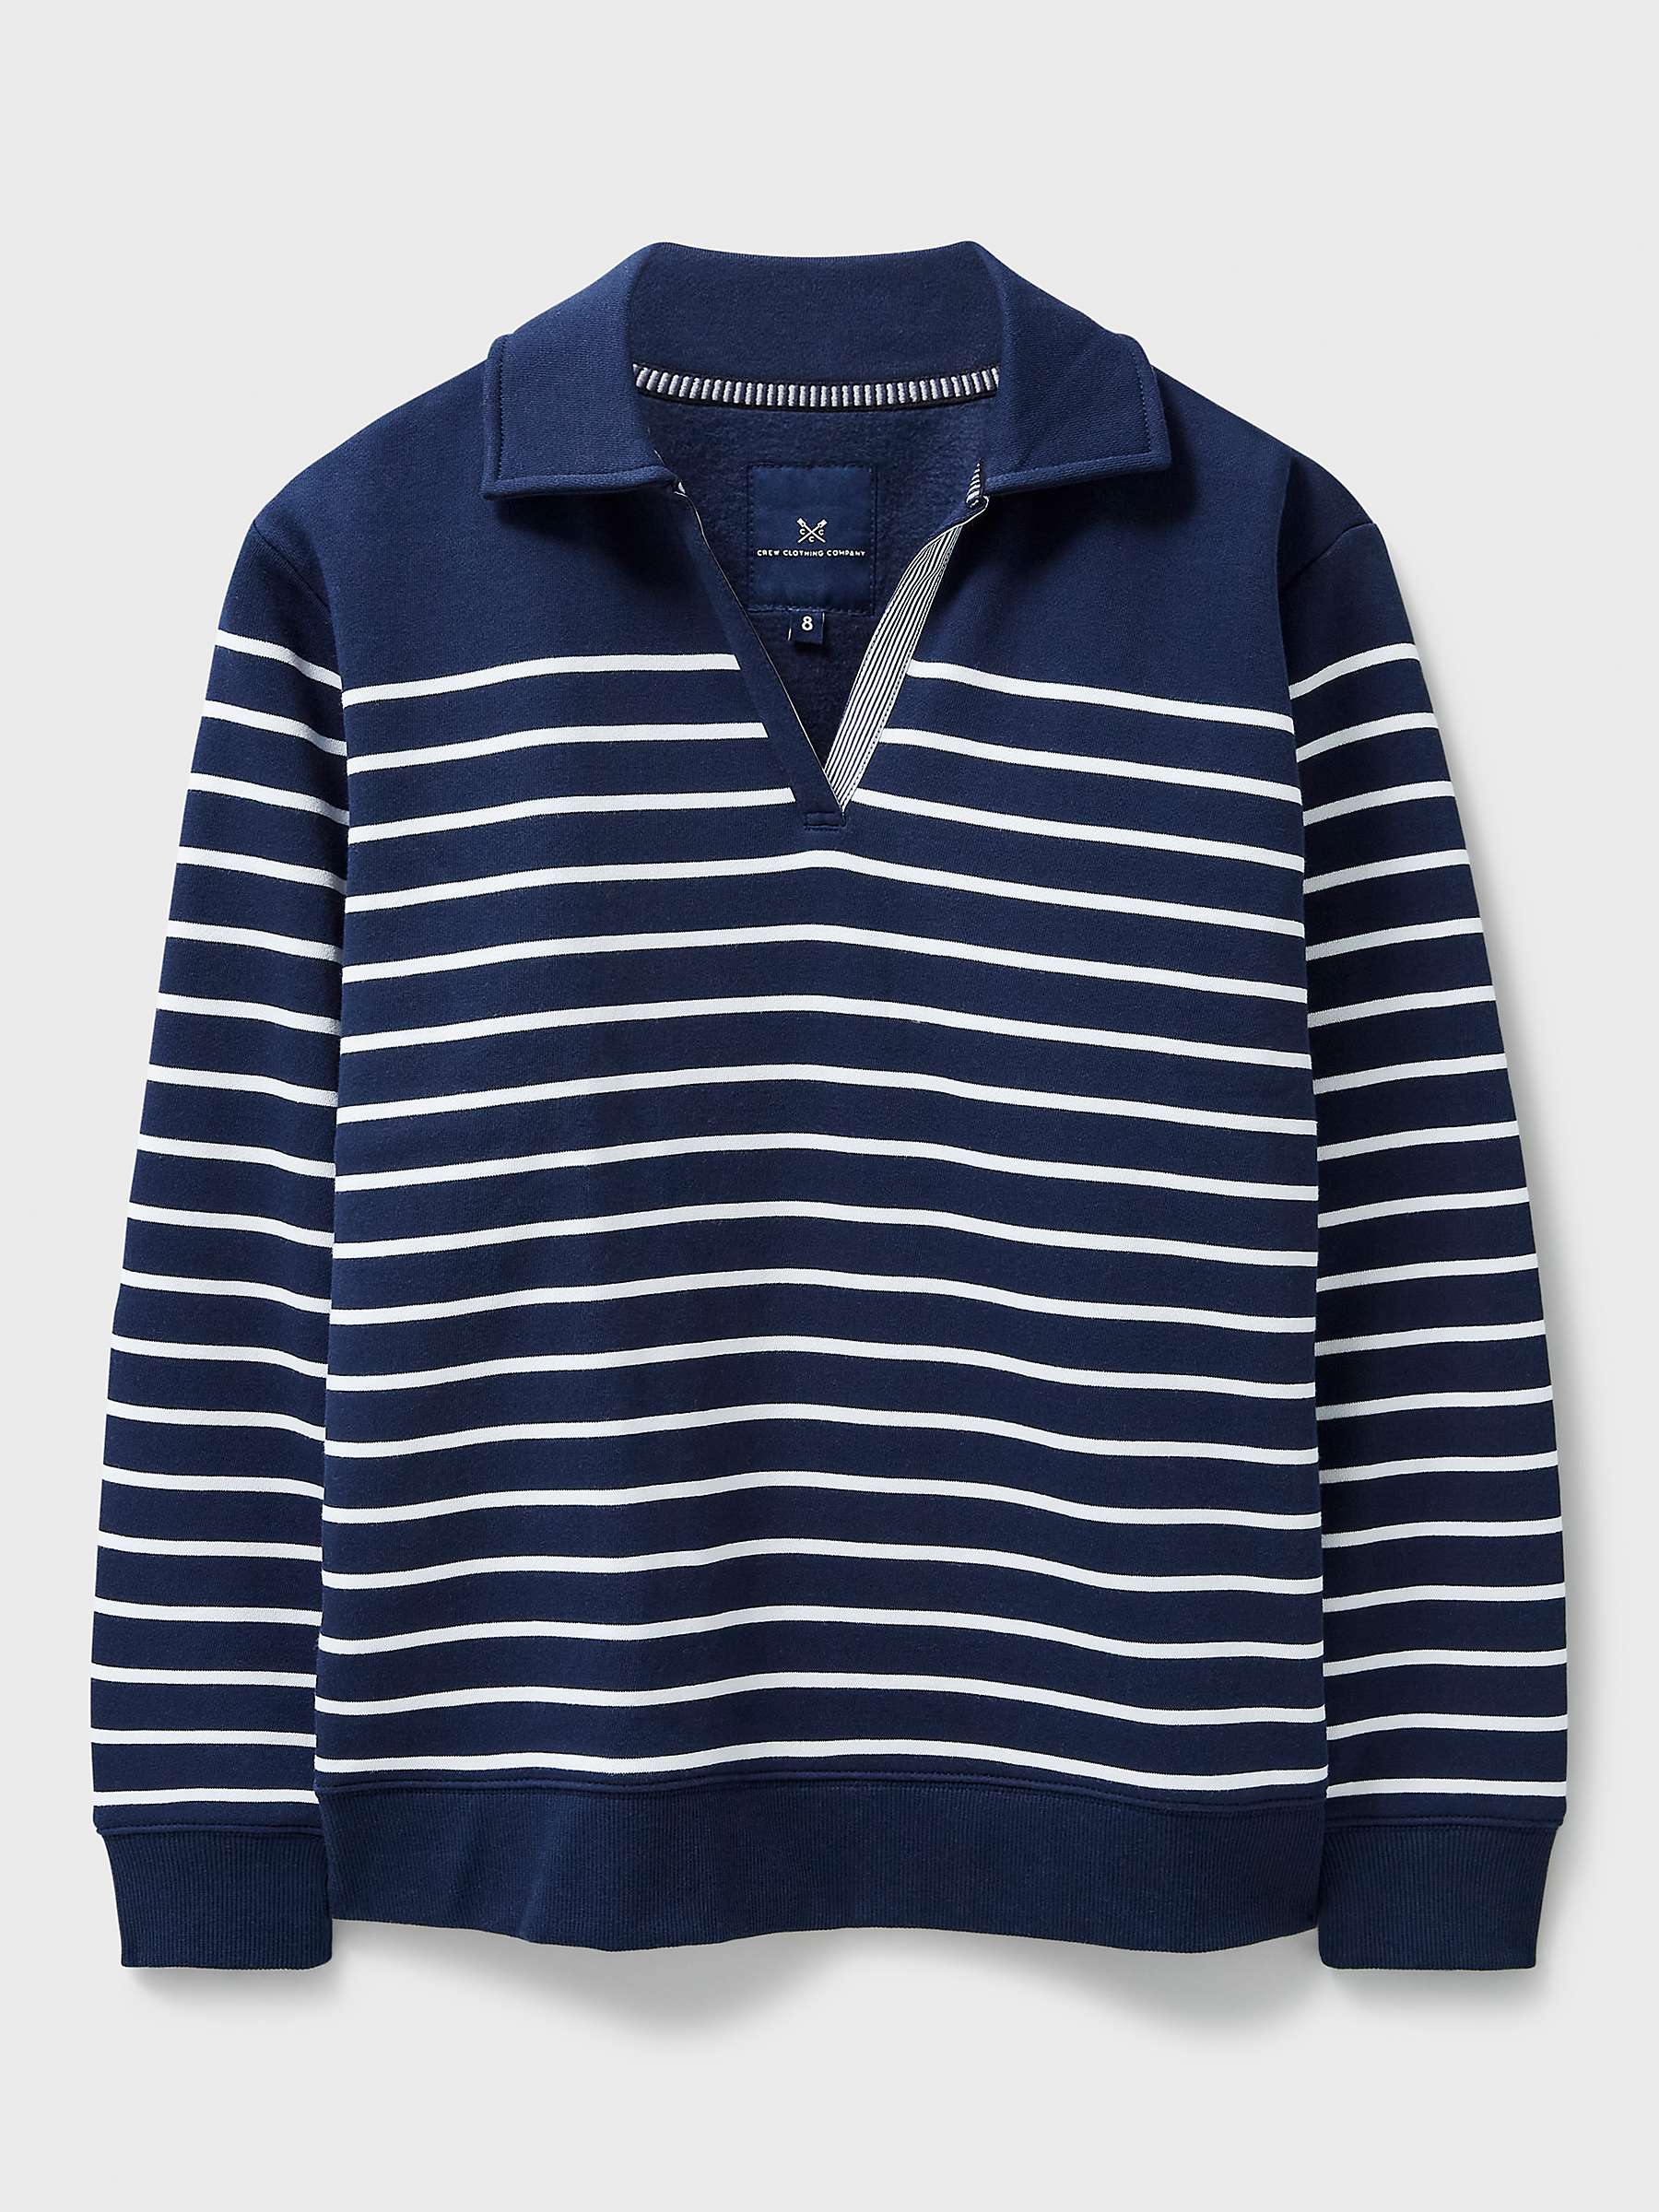 Buy Crew Clothing Sandy Stripe Open Collar Sweat Top, Dark Blue/White Online at johnlewis.com